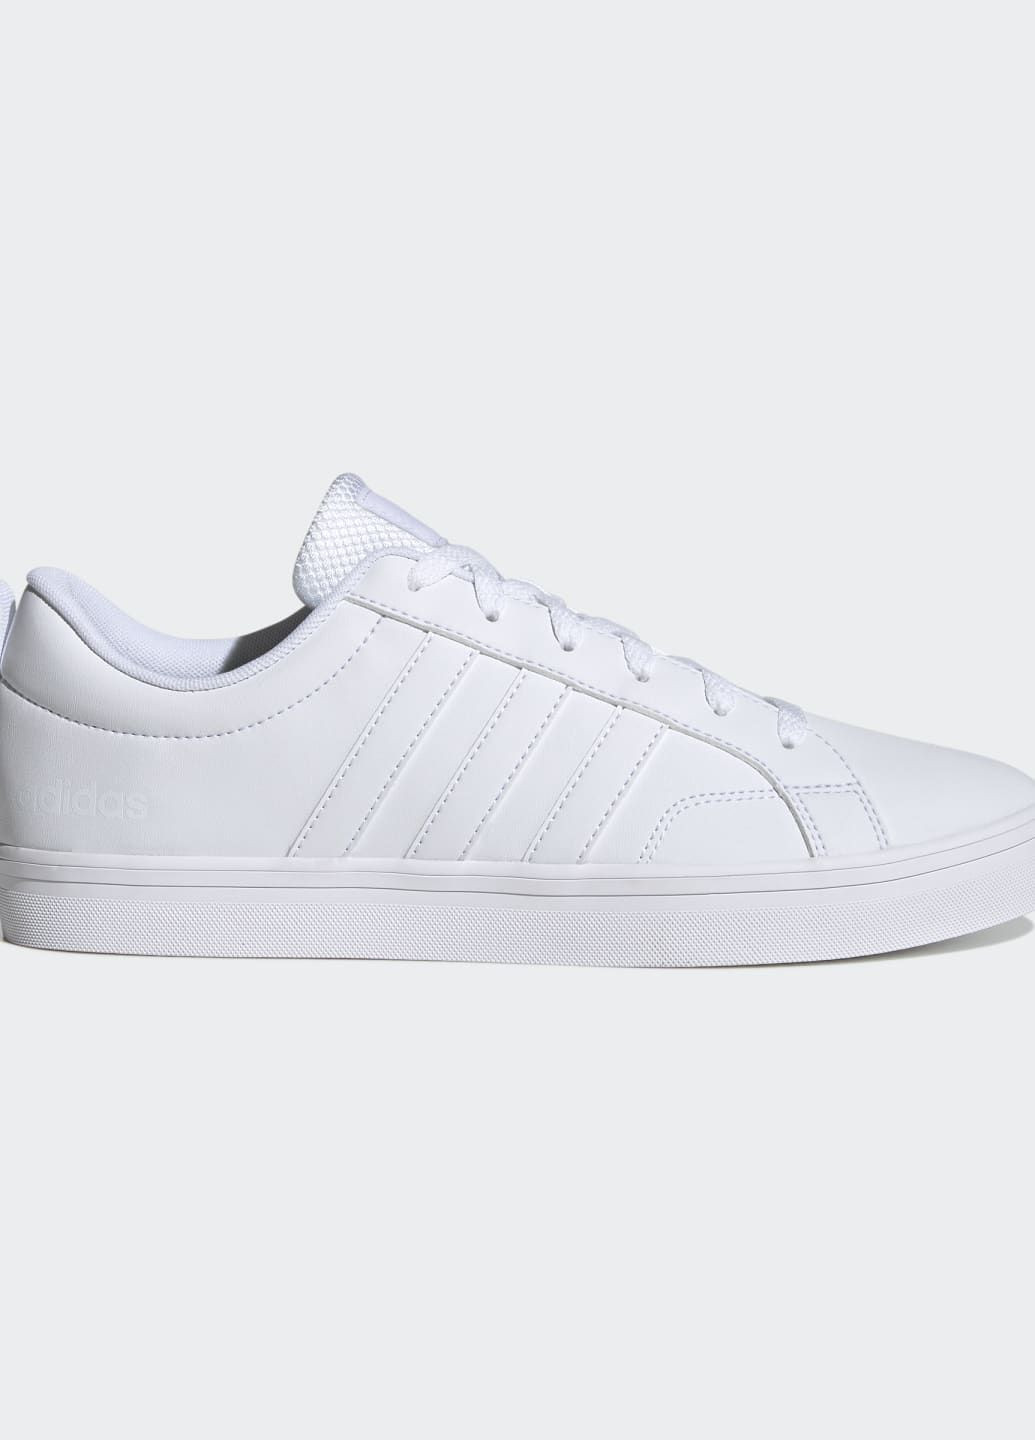 Білі всесезон кросівки vs pace 2.0 3-stripes branding synthetic nubuck adidas